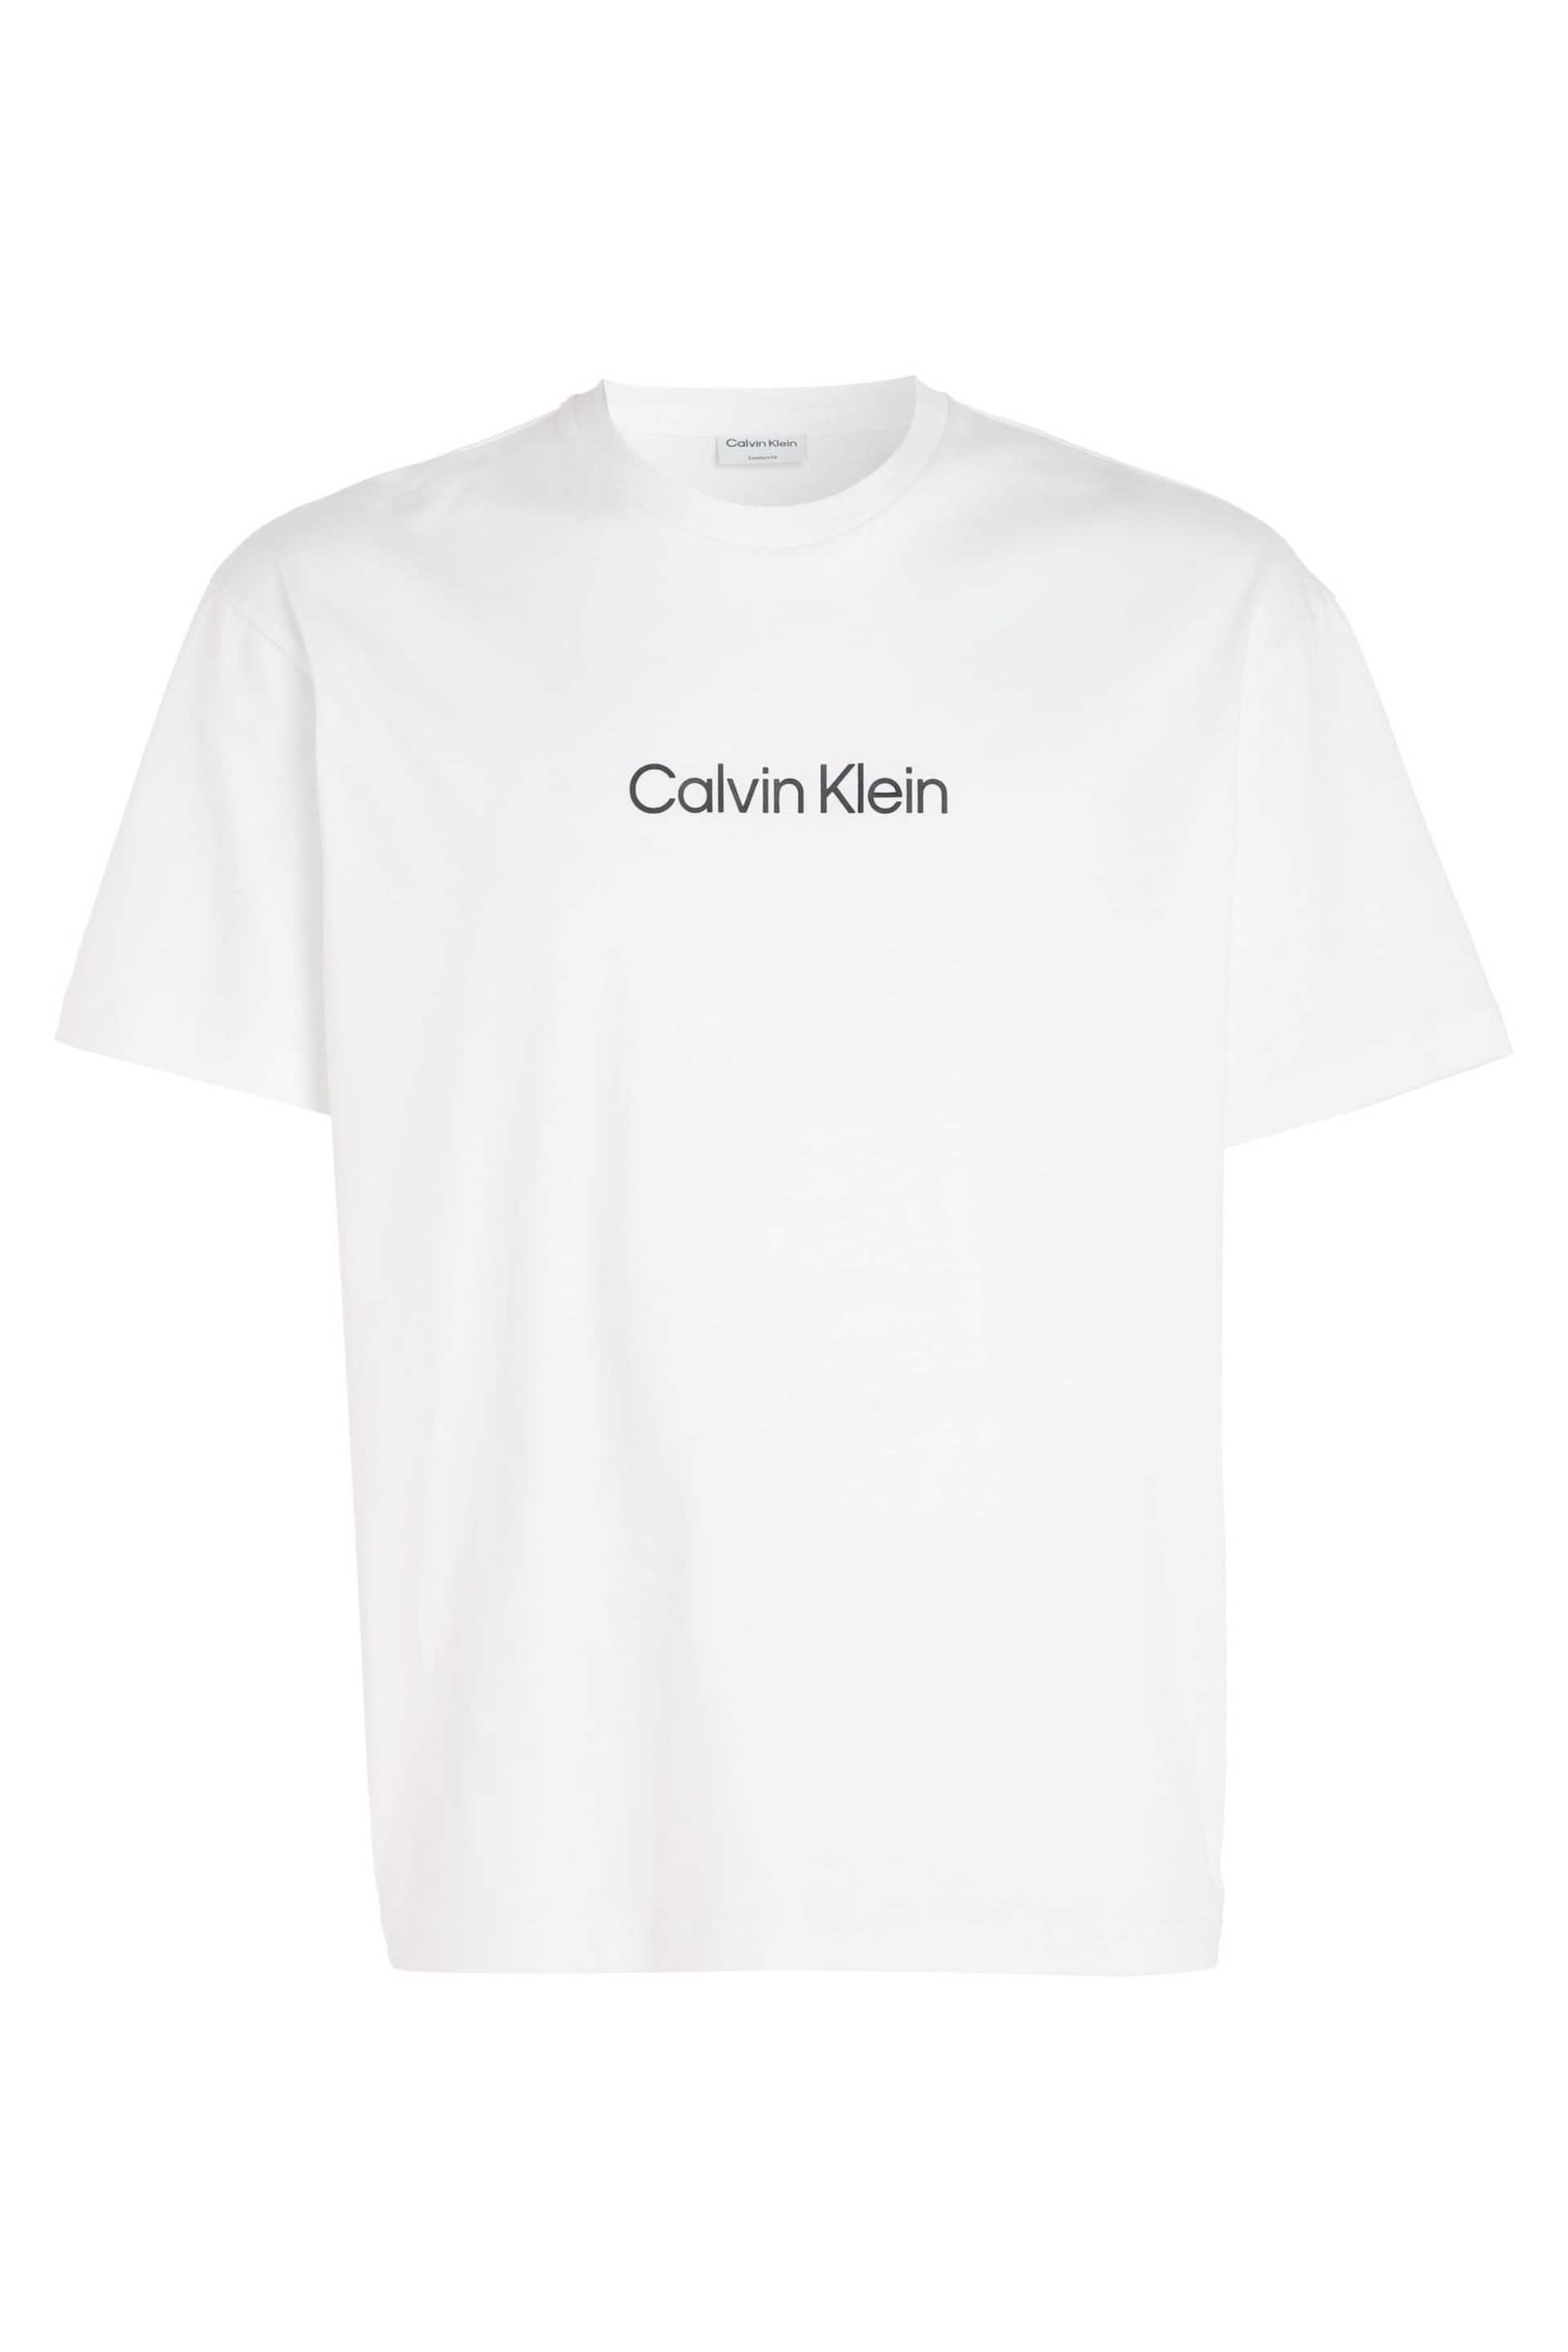 Calvin Klein White Slim Fit Logo Comfort T-Shirt - Image 4 of 6